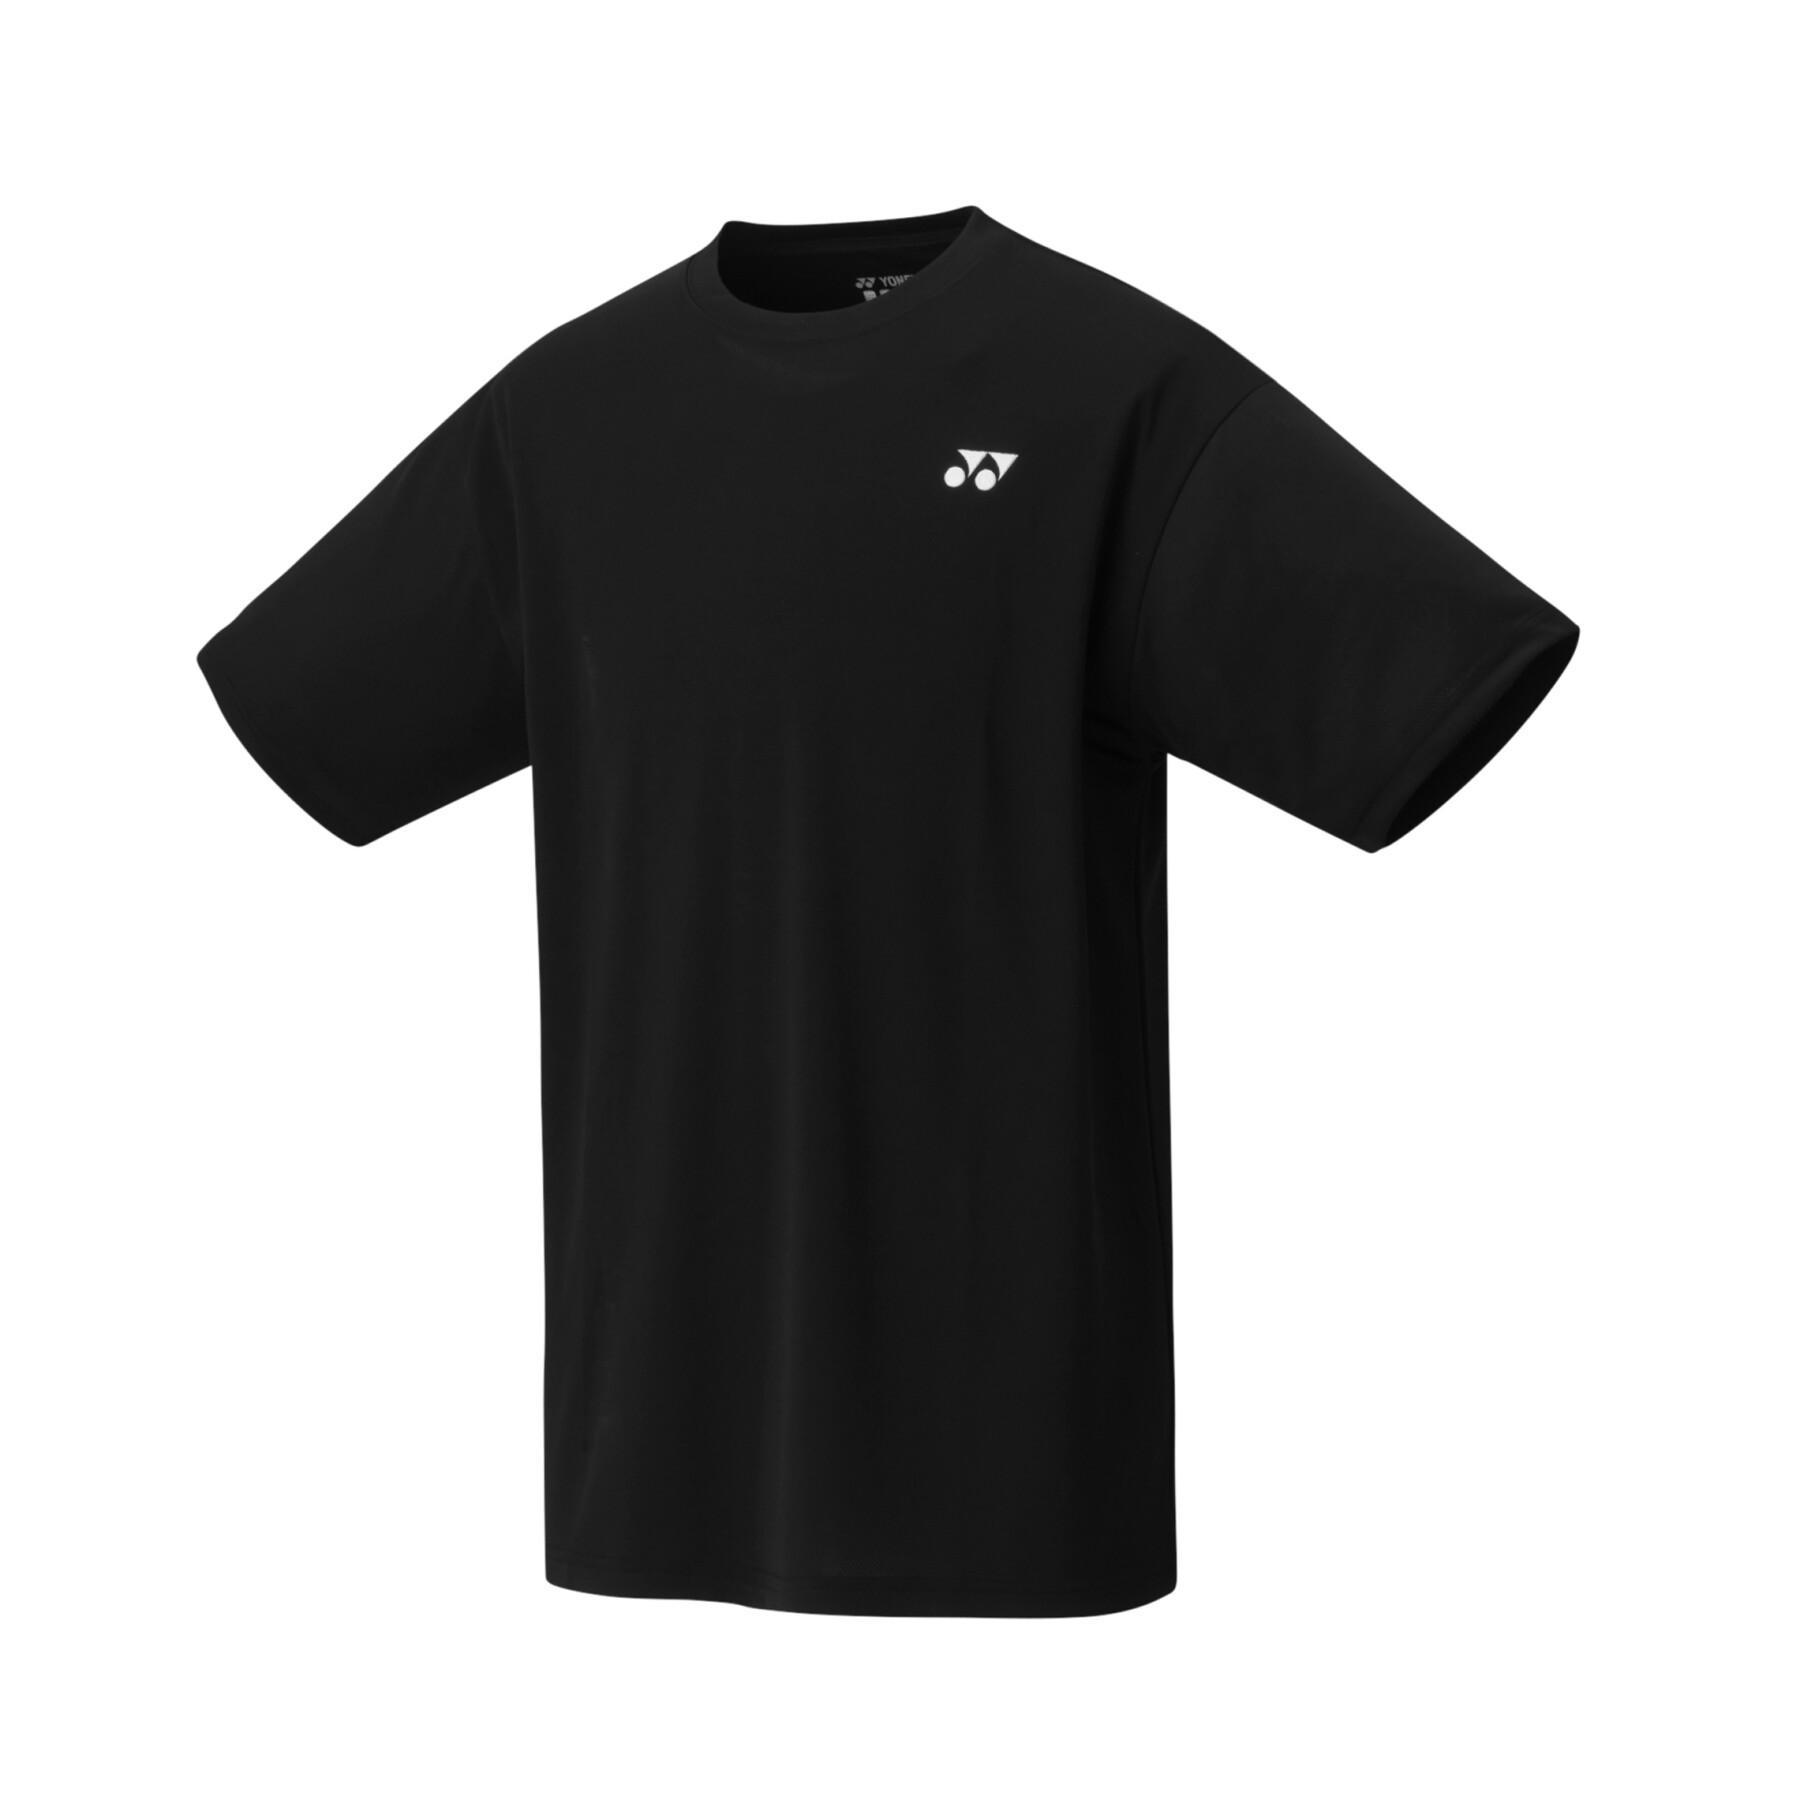 Camiseta Yonex plain logo